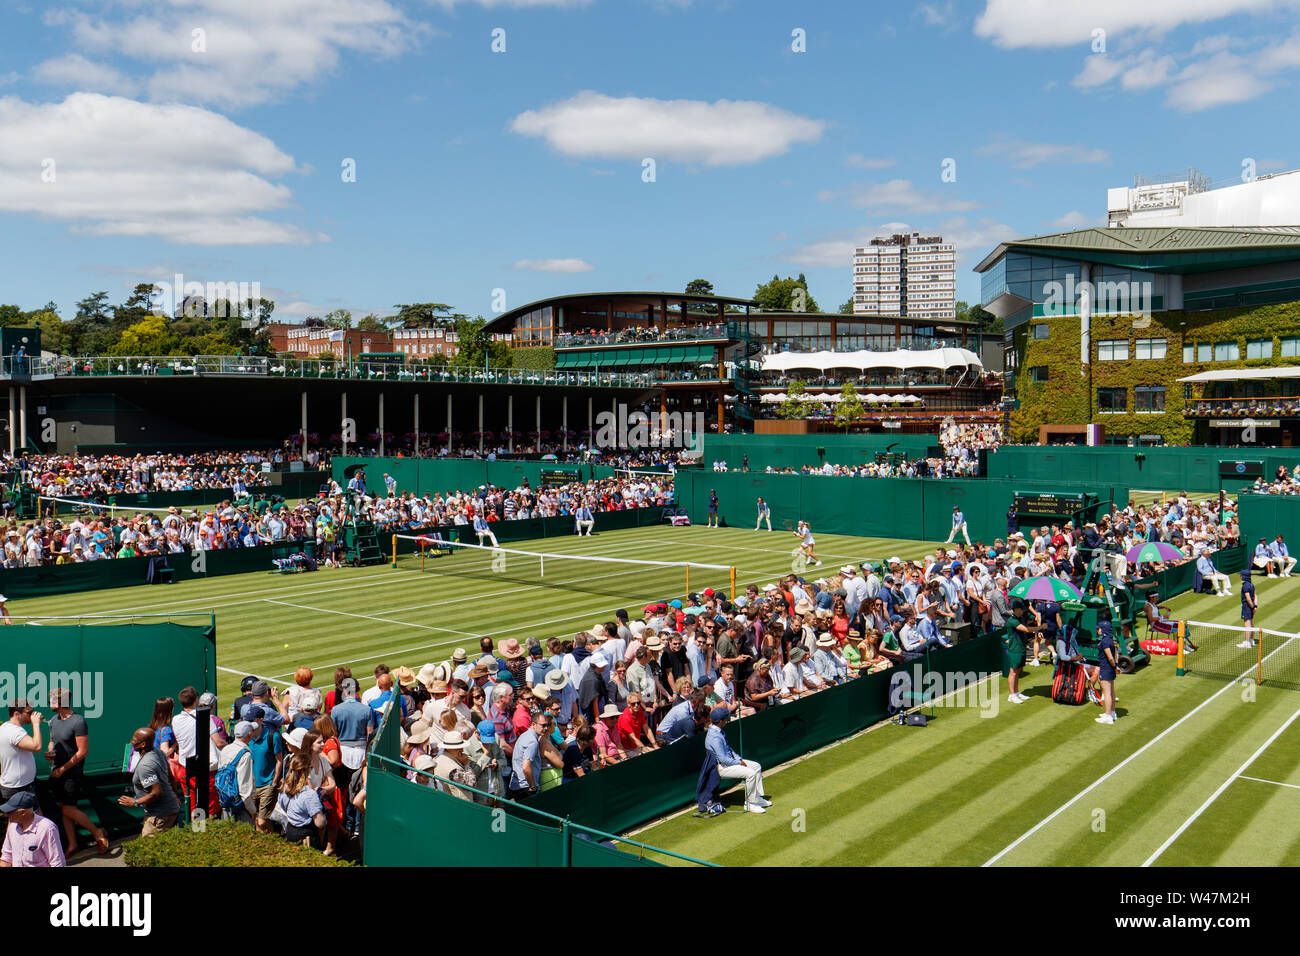 Vista general de los campeonatos de Wimbledon 2019. Celebrado en el All England Lawn Tennis Club, el Torneo de Tenis de Wimbledon. Foto de stock